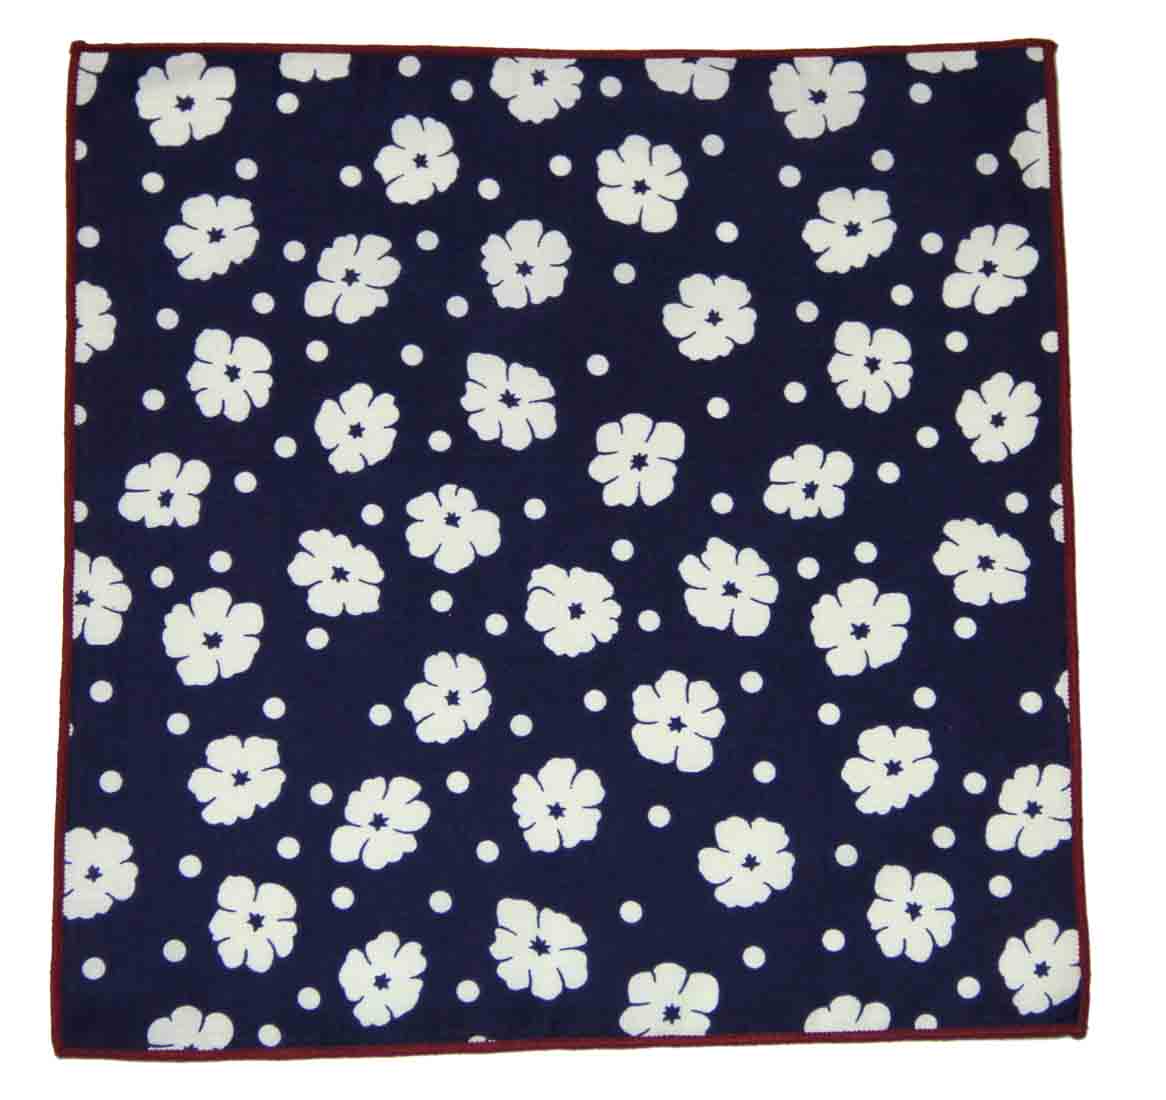 Gascoigne Pocket Square Floral Dots Navy Blue White Red Cotton Men's